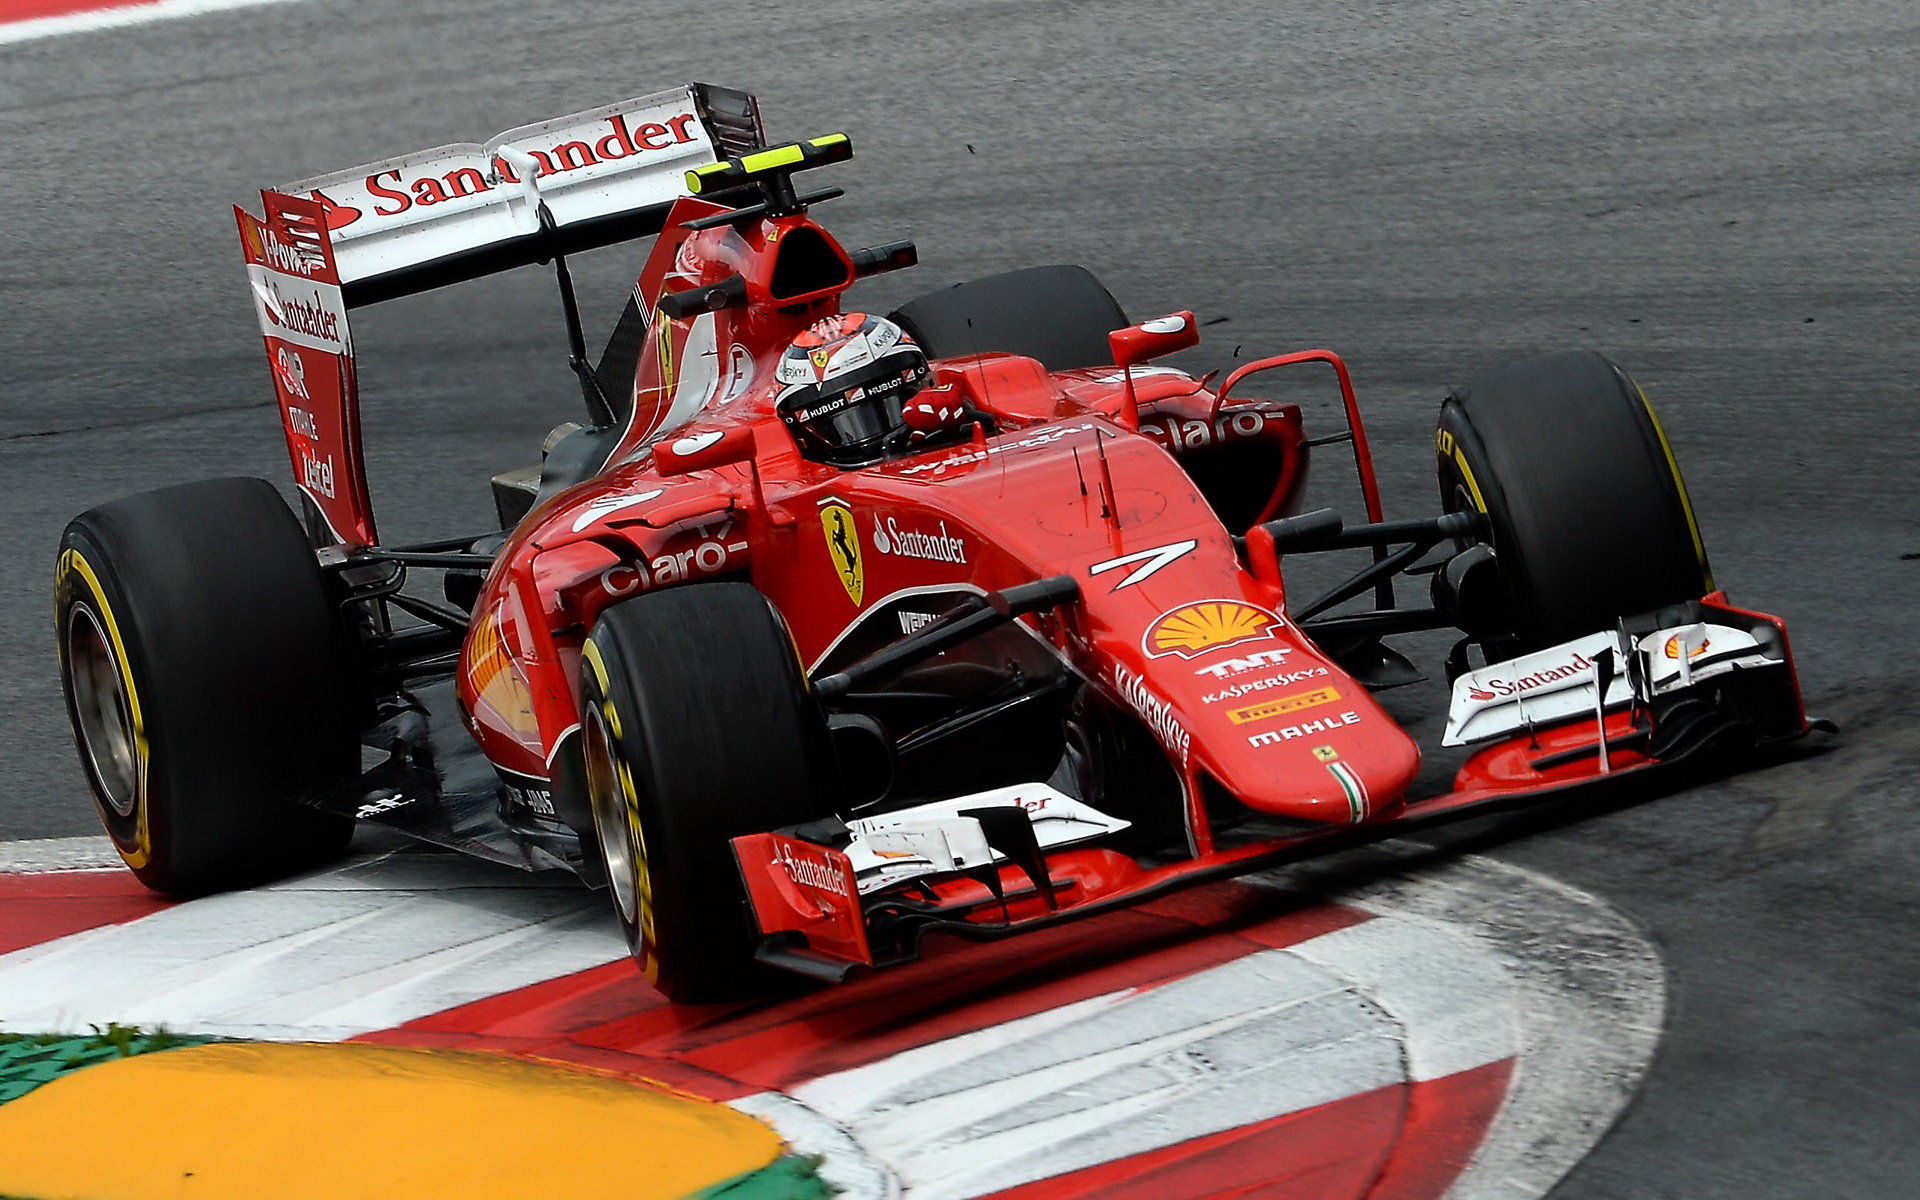 Kimi Räikkönen - zůstane u Ferrari i příští rok?